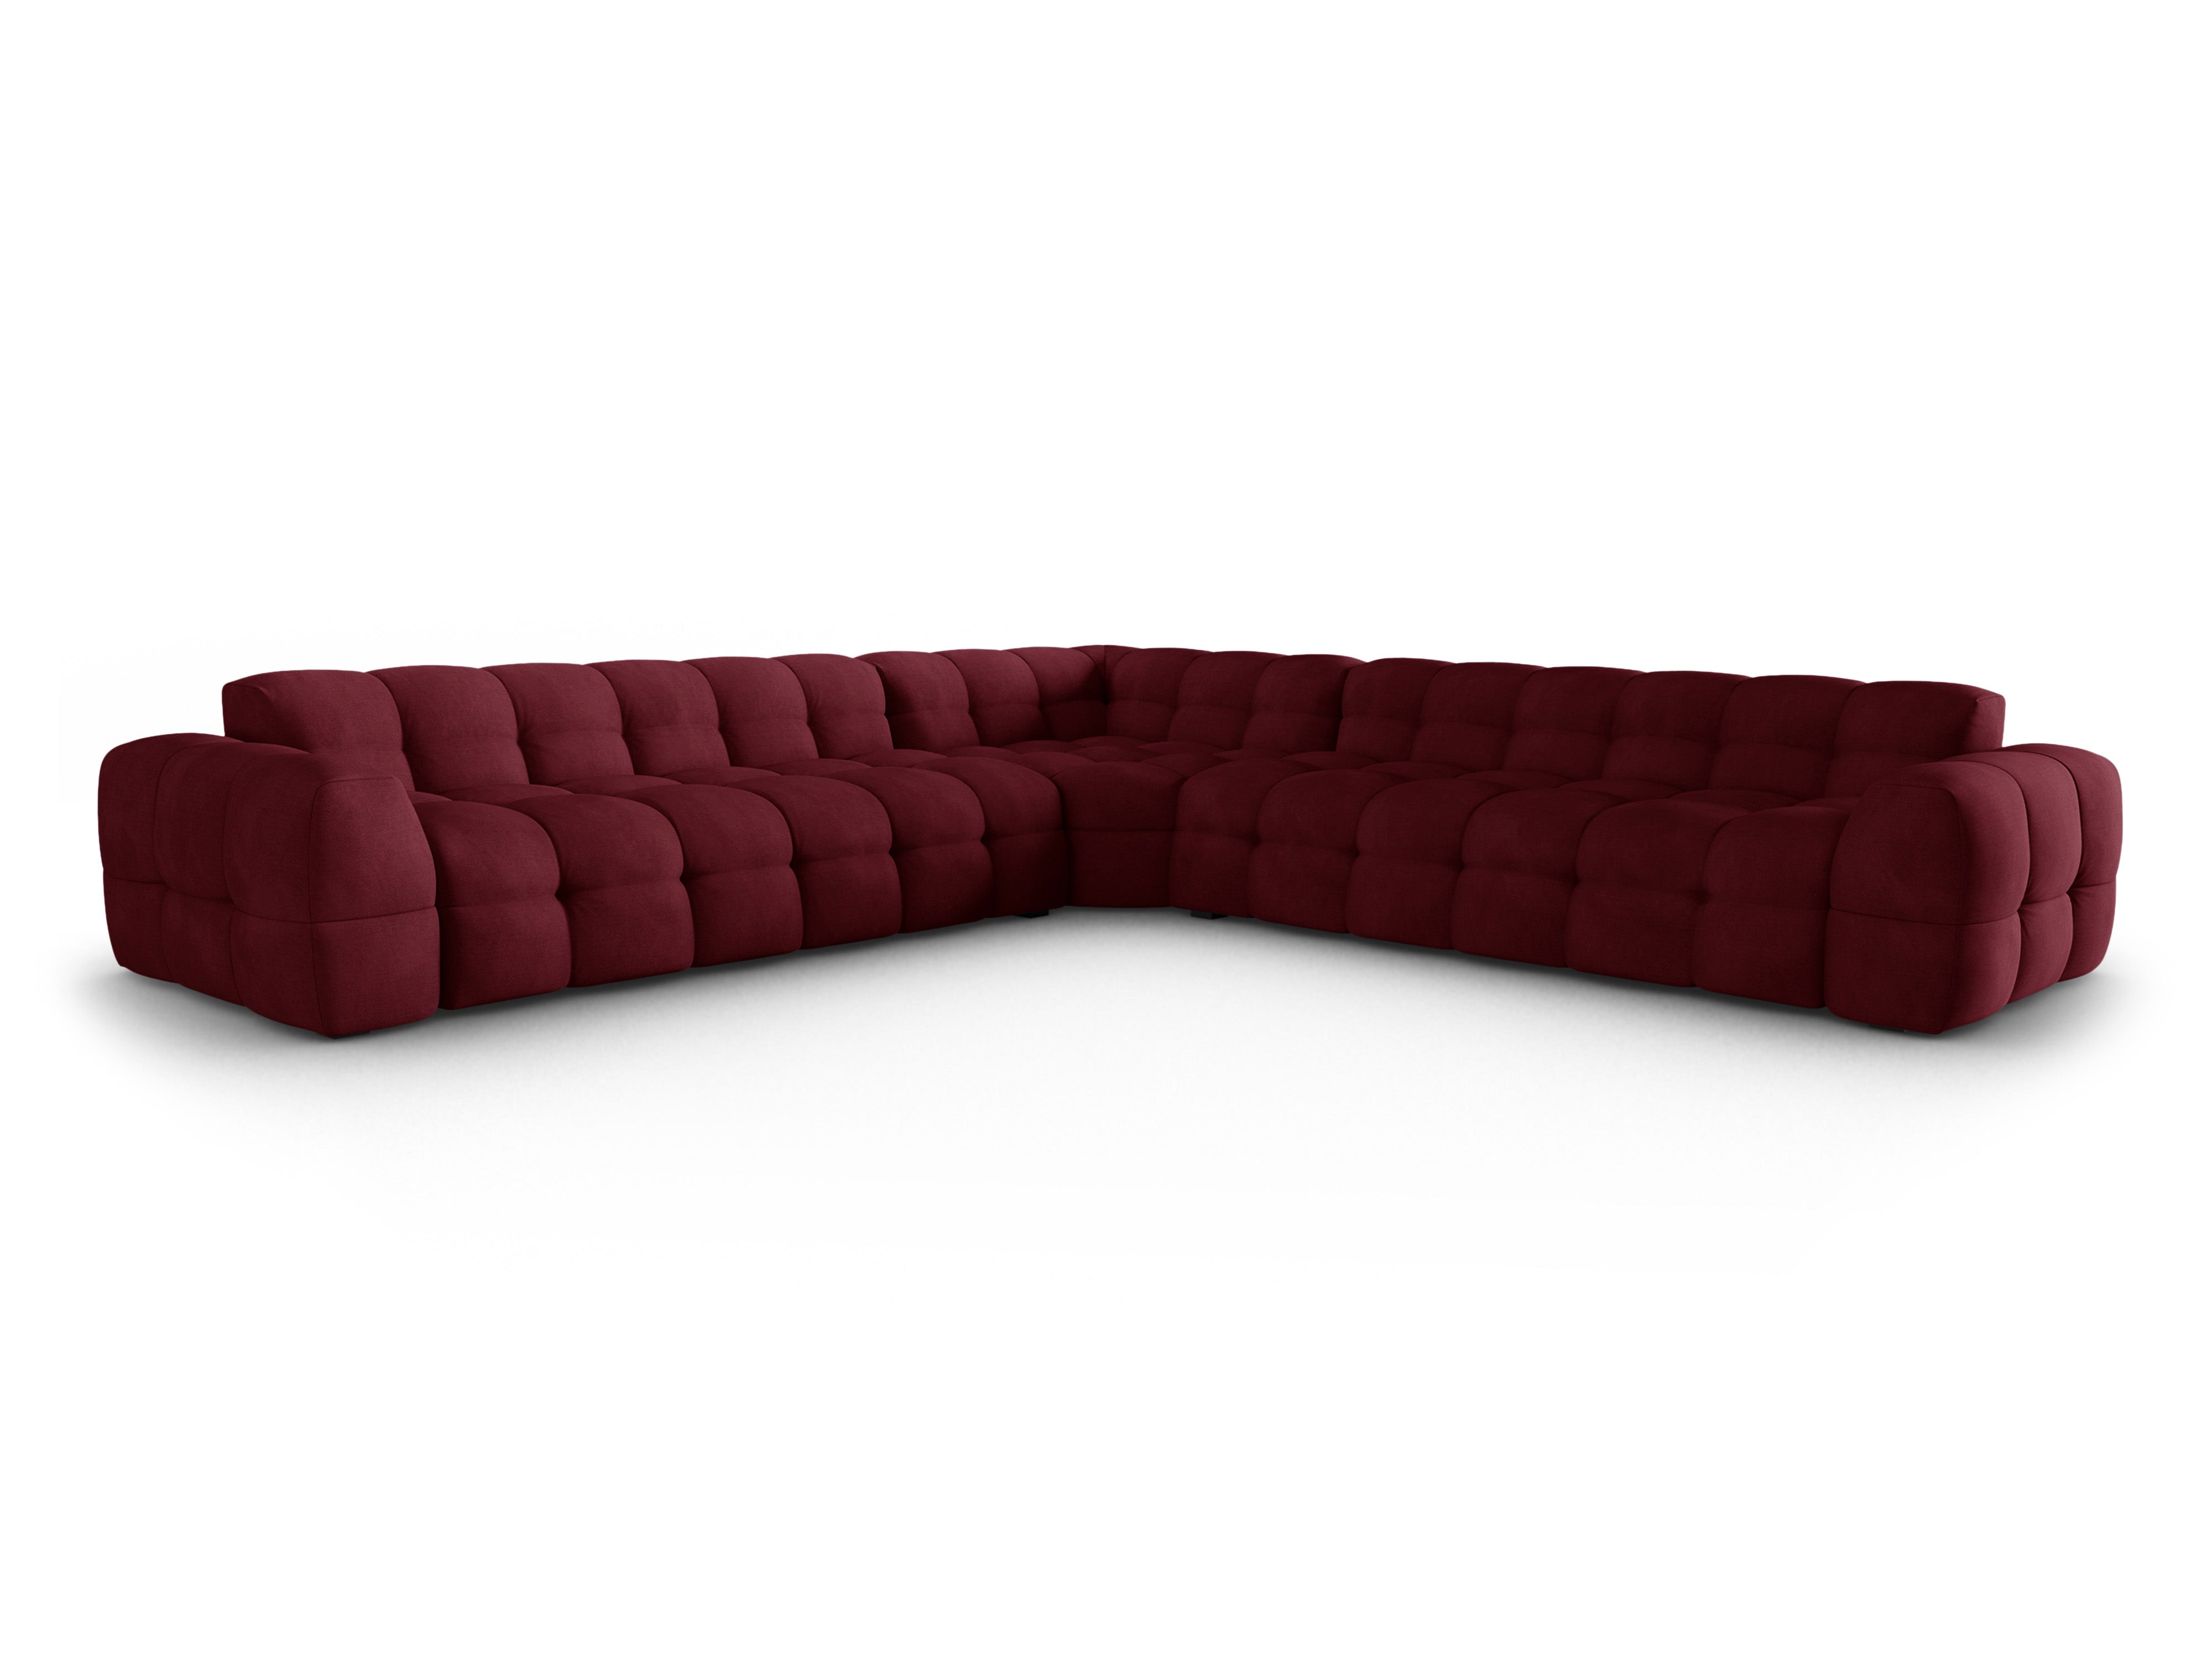 Symmetrical Corner Sofa, "Nino", 7 Seats, 322x322x68
Made in Europe, Maison Heritage, Eye on Design